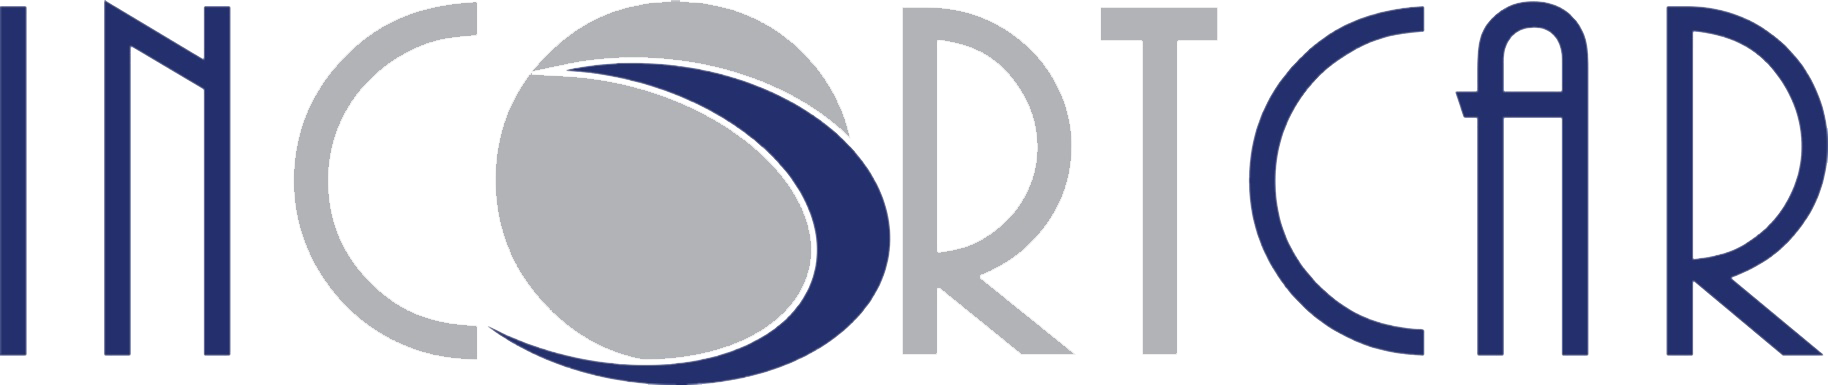 Incortcar-logo